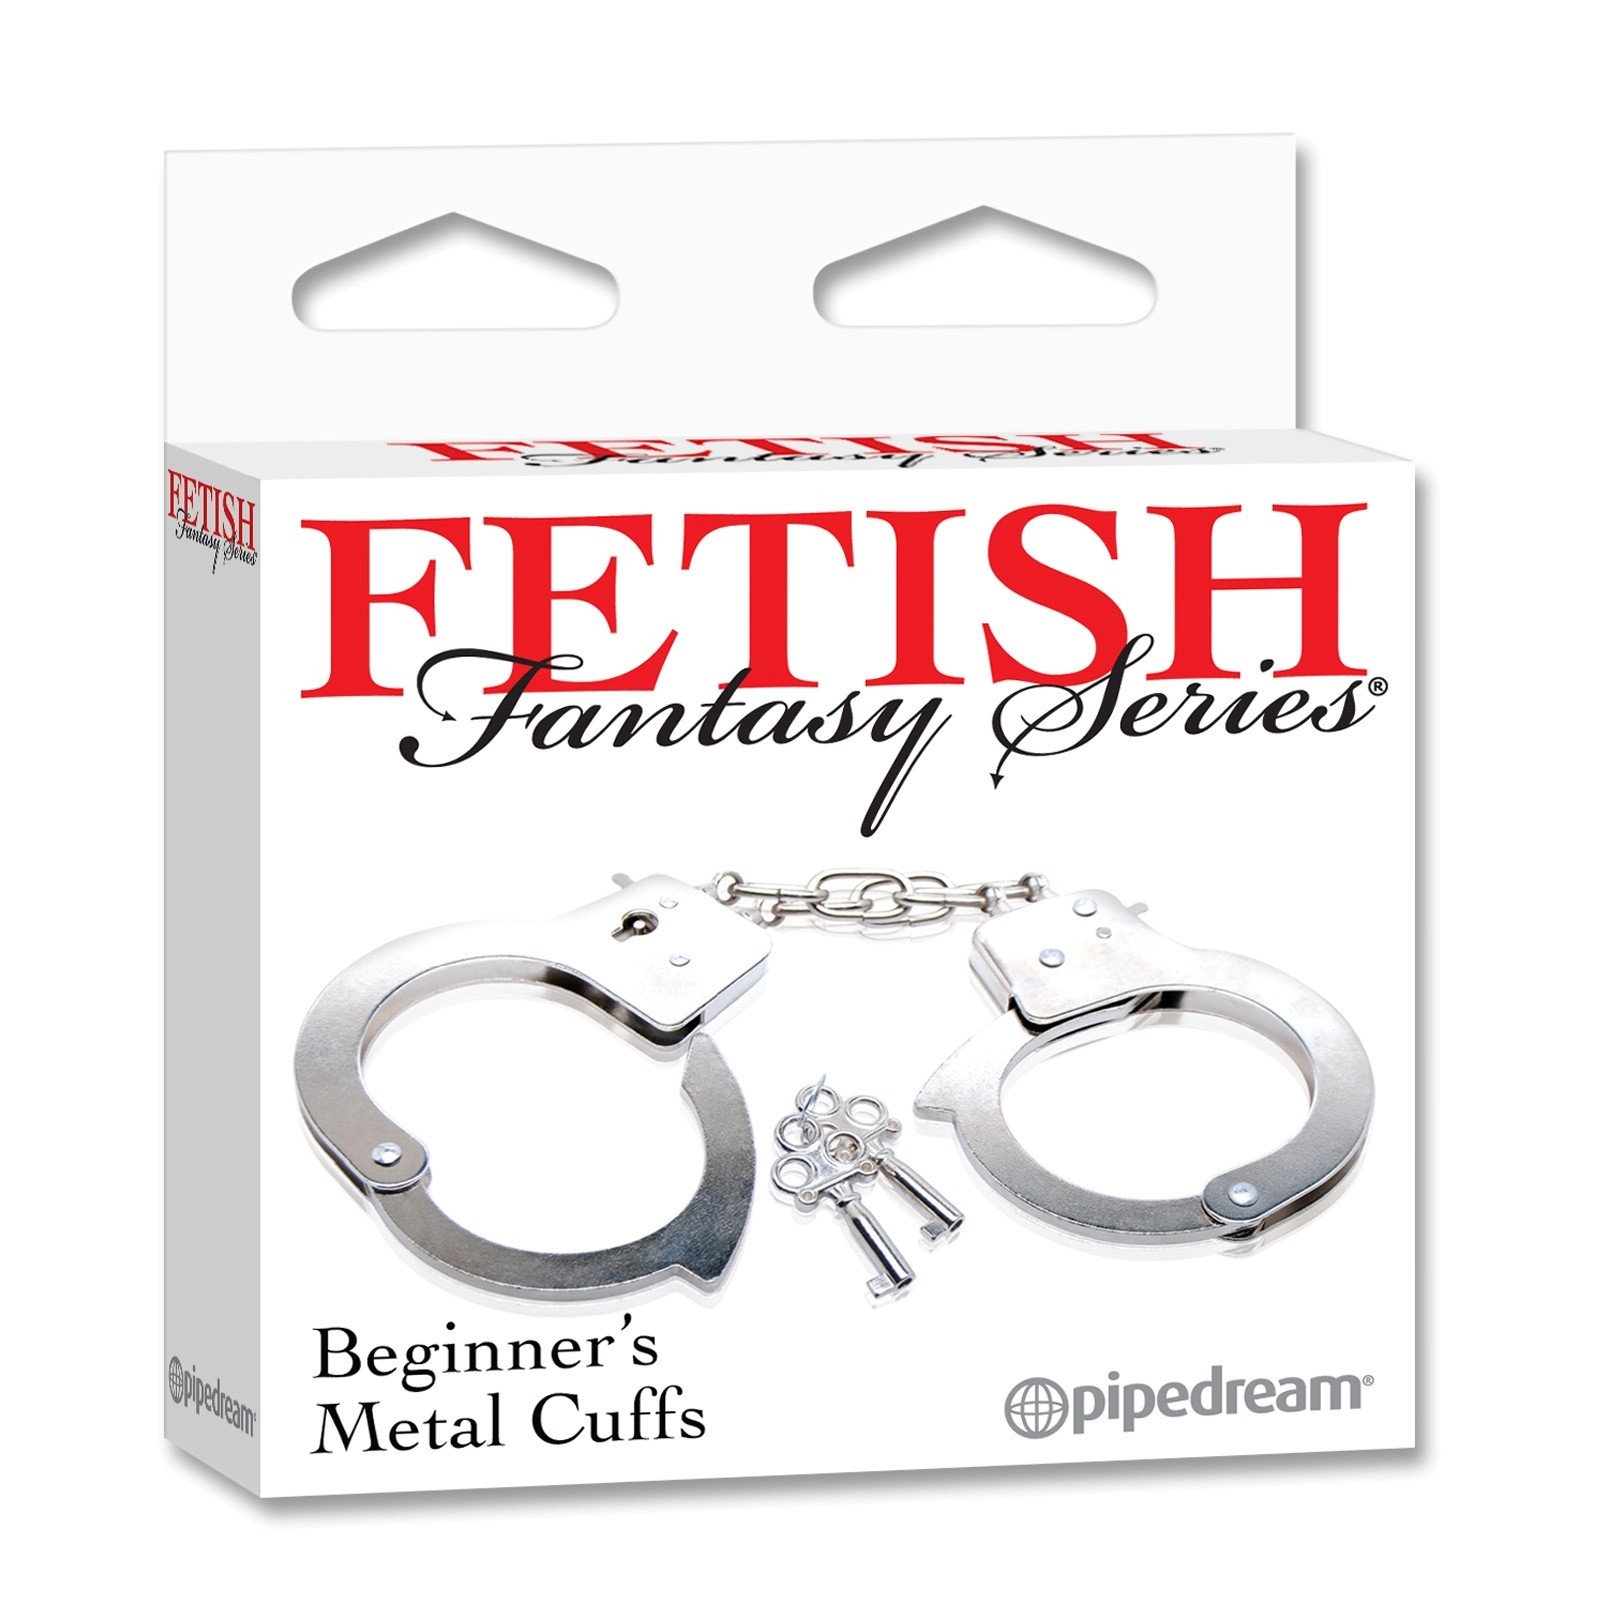 Antrankiai „Beginners Metal Cuffs“ - Fetish Fantasy